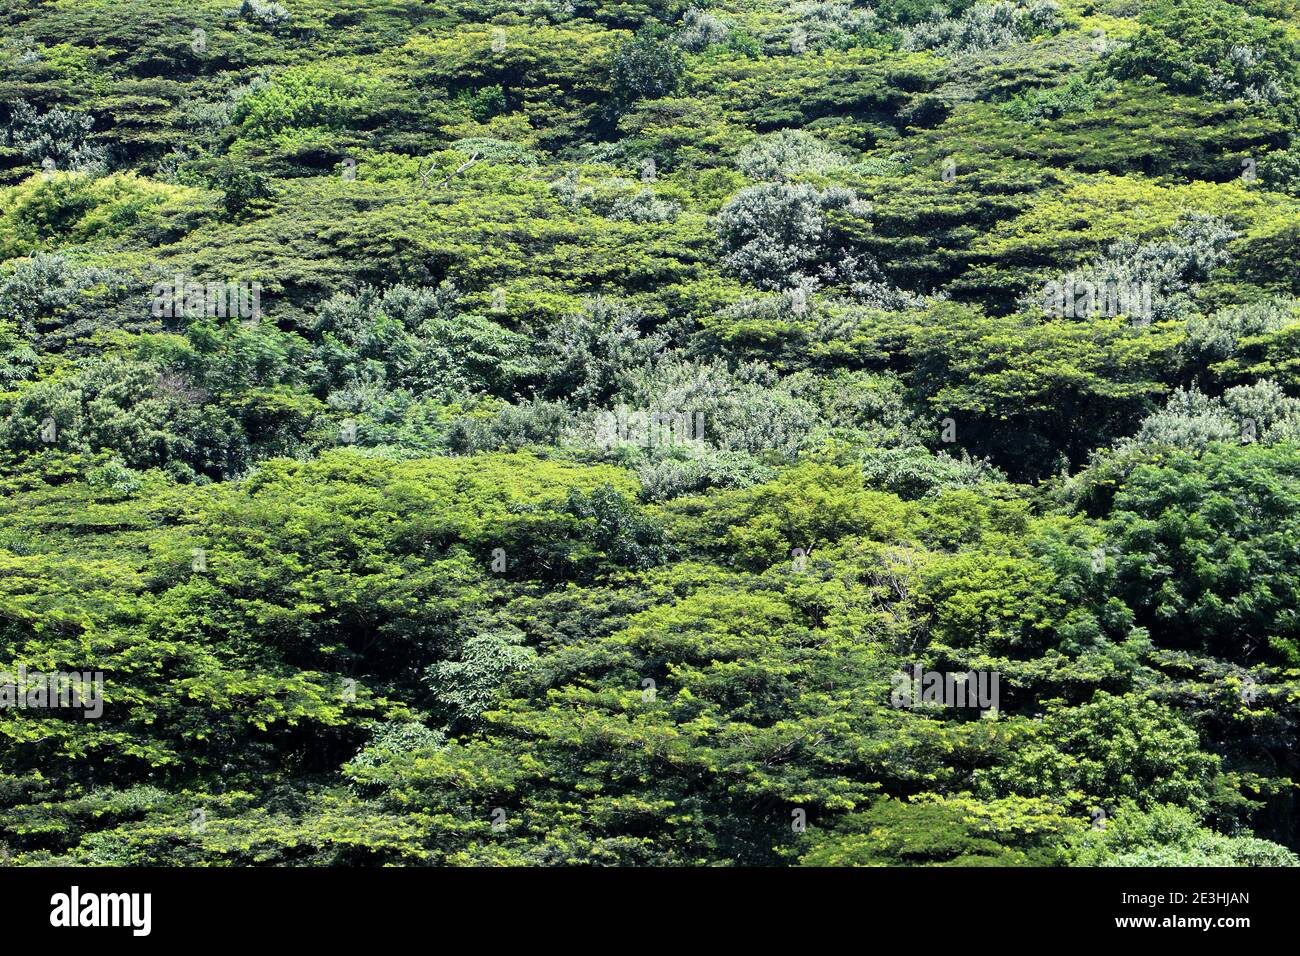 Lush green forest jungle wallpaper Stock Photo